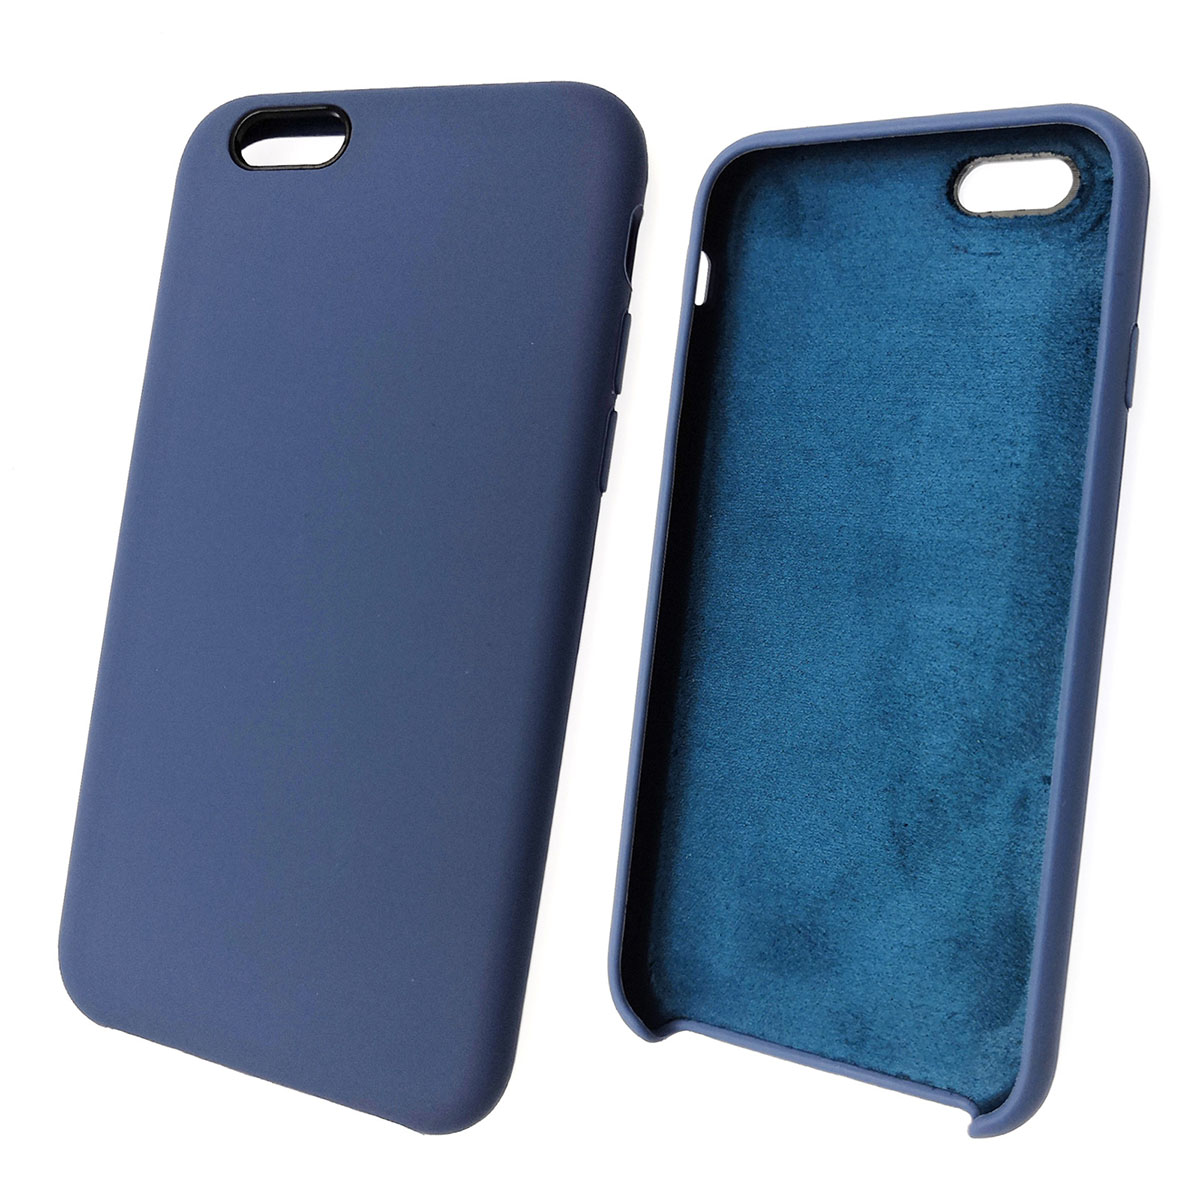 Чехол накладка Silicon Case для APPLE iPhone 6, 6G,6S, силикон, бархат, цвет синий кобальт.